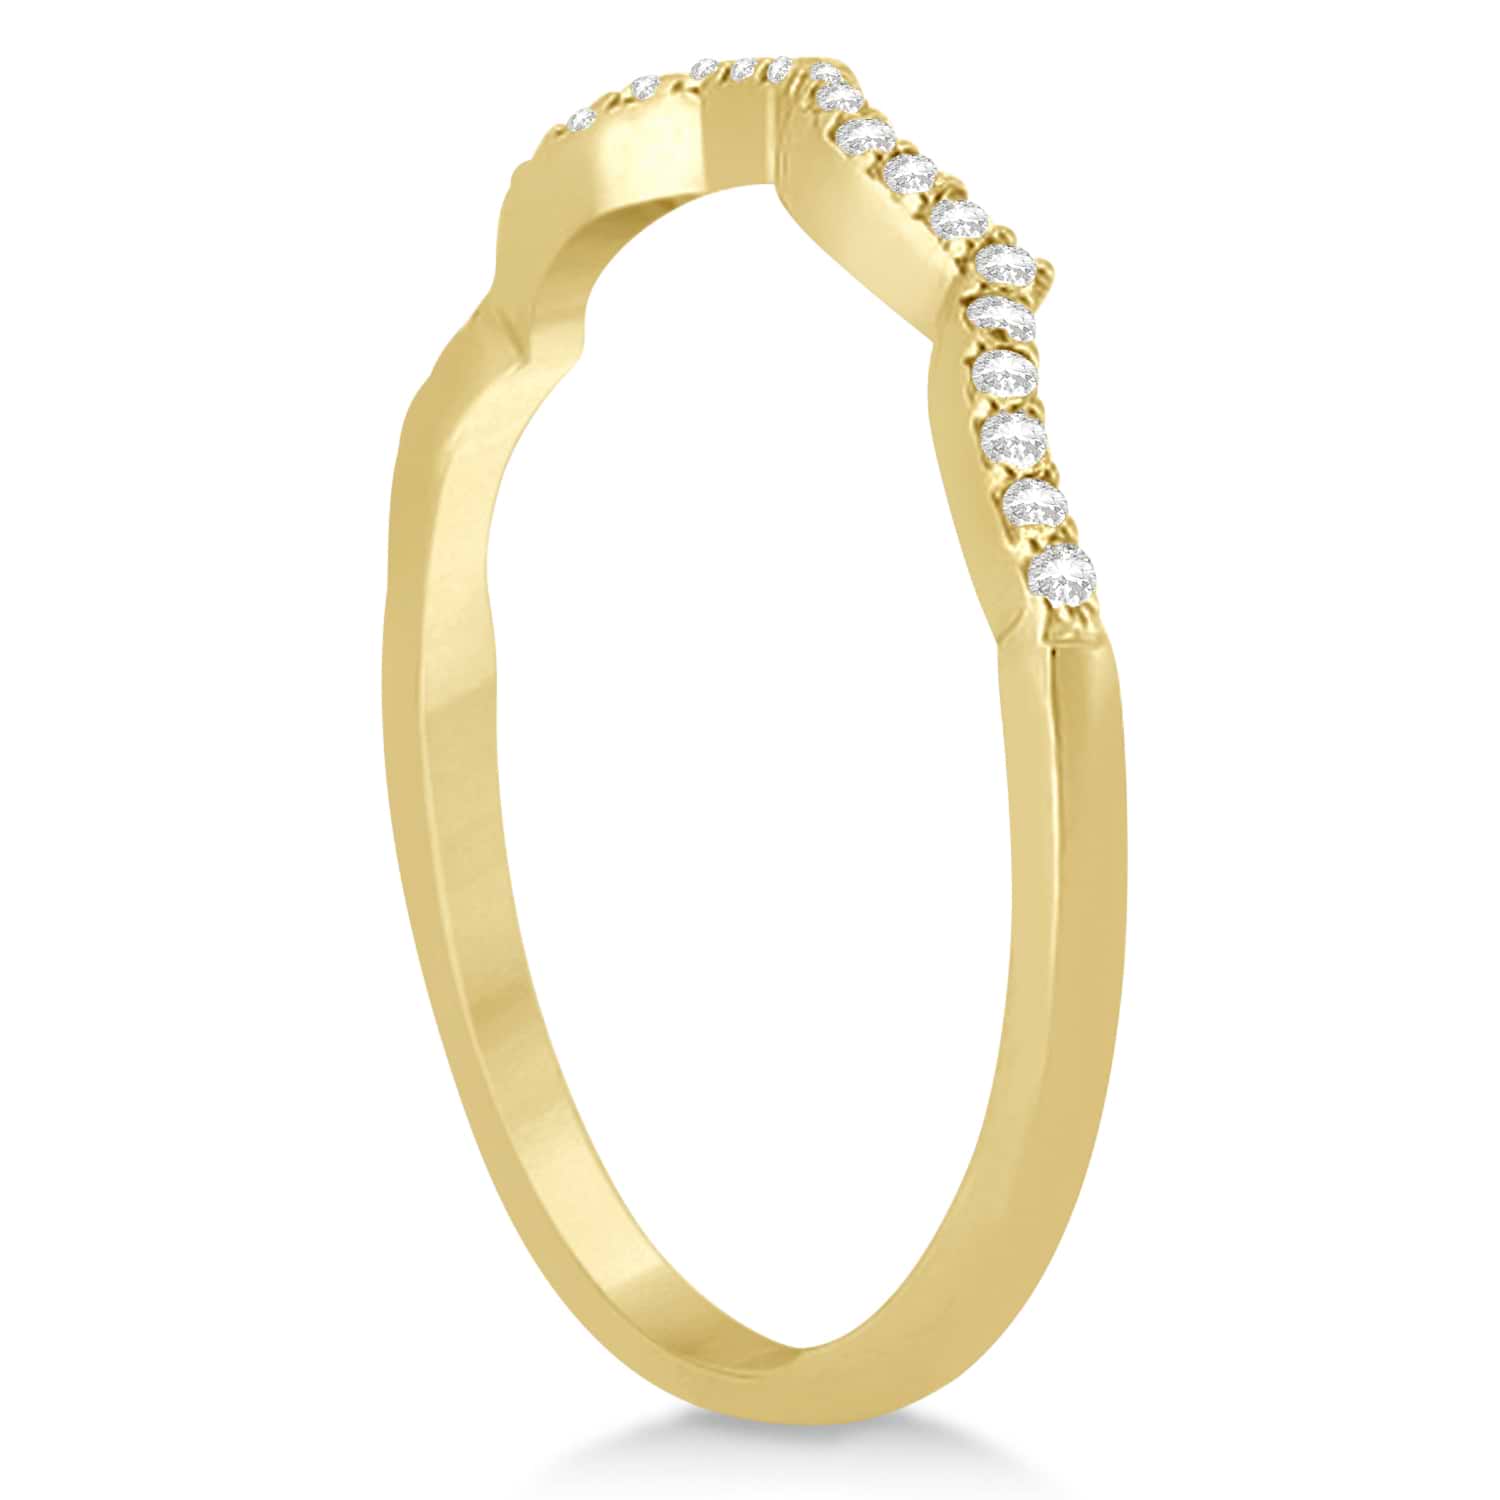 Twisted Infinity Oval Diamond Bridal Set 18k Yellow Gold (1.13ct)